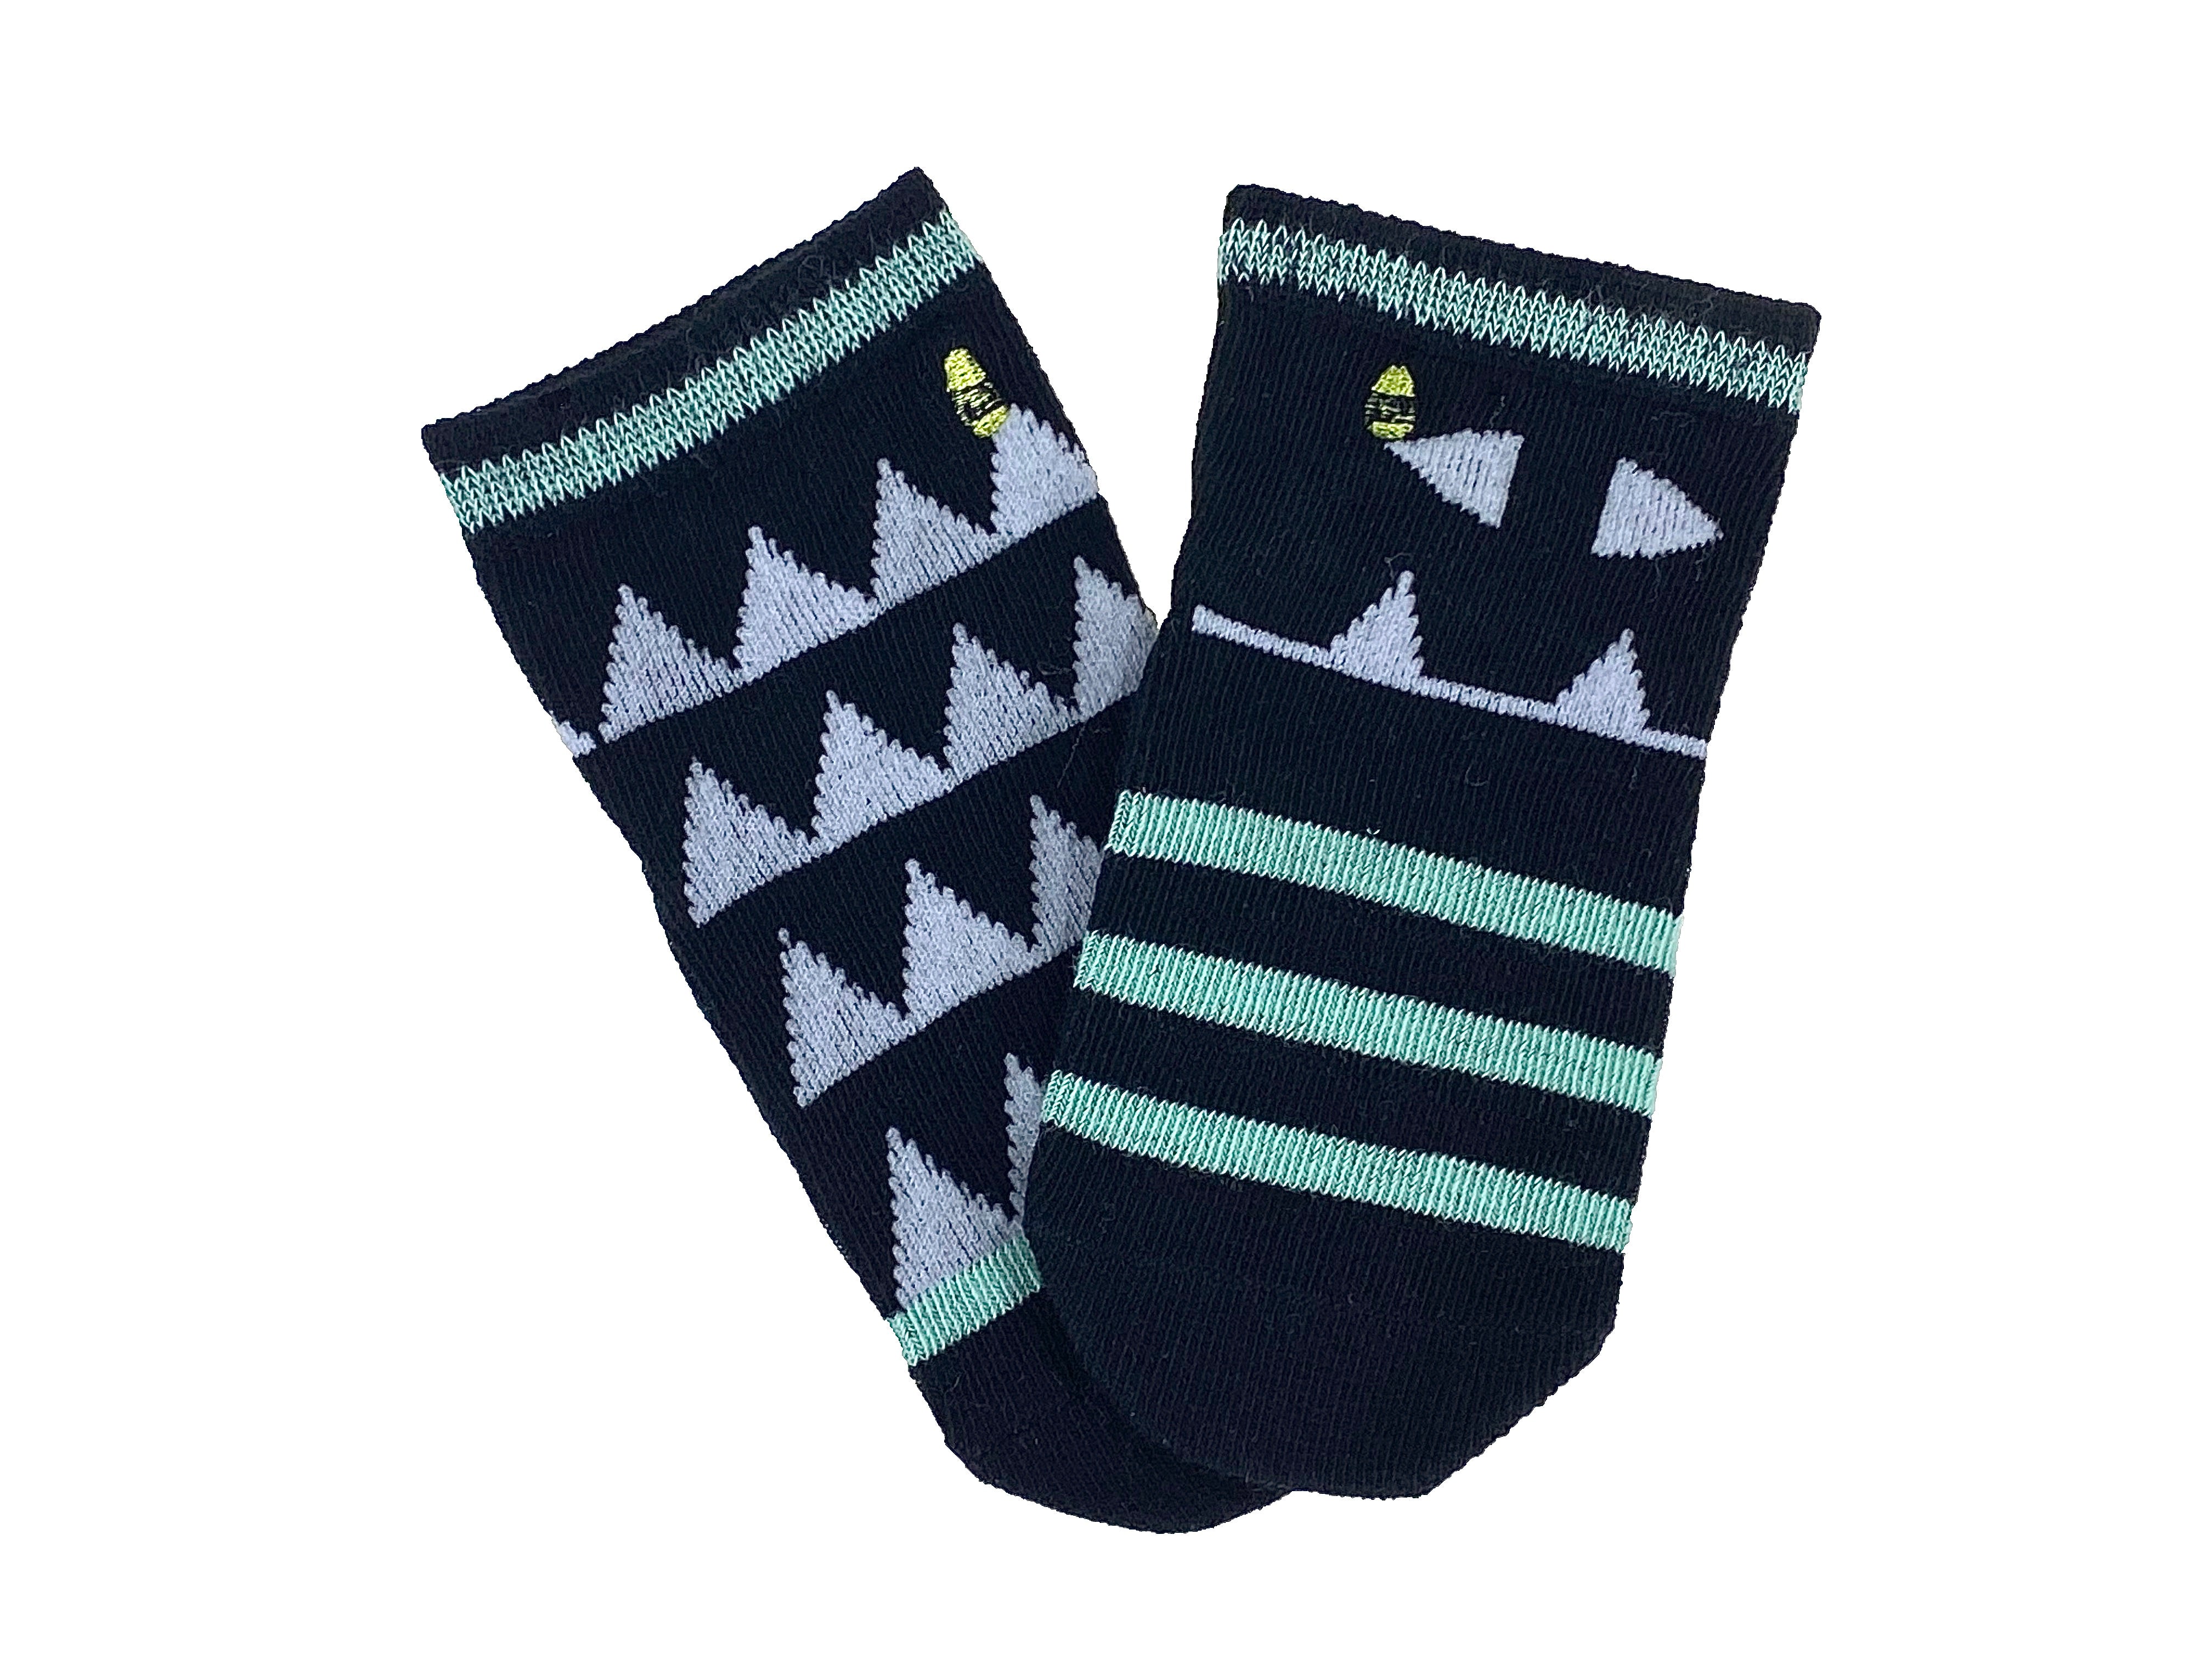 6 Pairs of Little Monster Socks - Size 2T-4T    